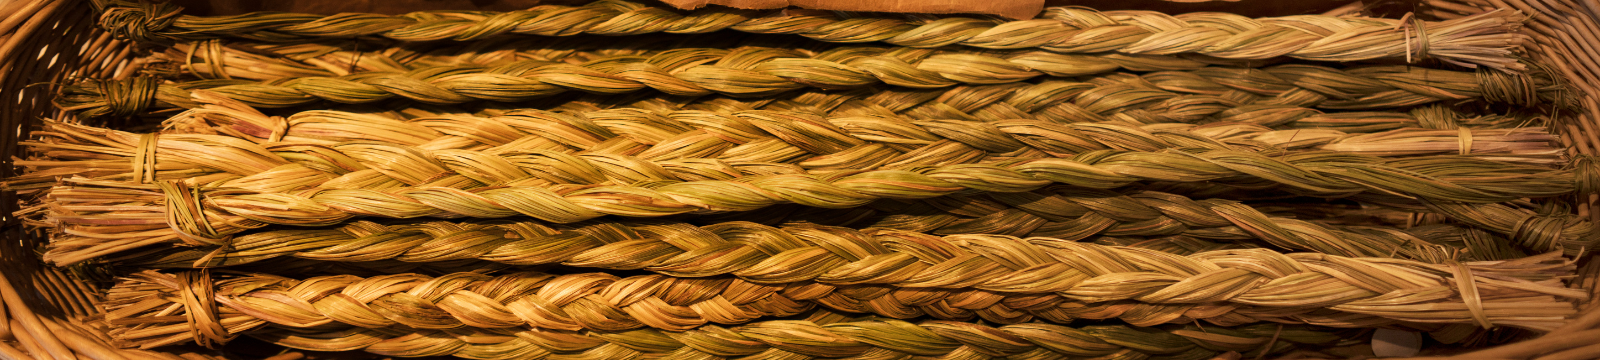 Image of braided sweetgrass